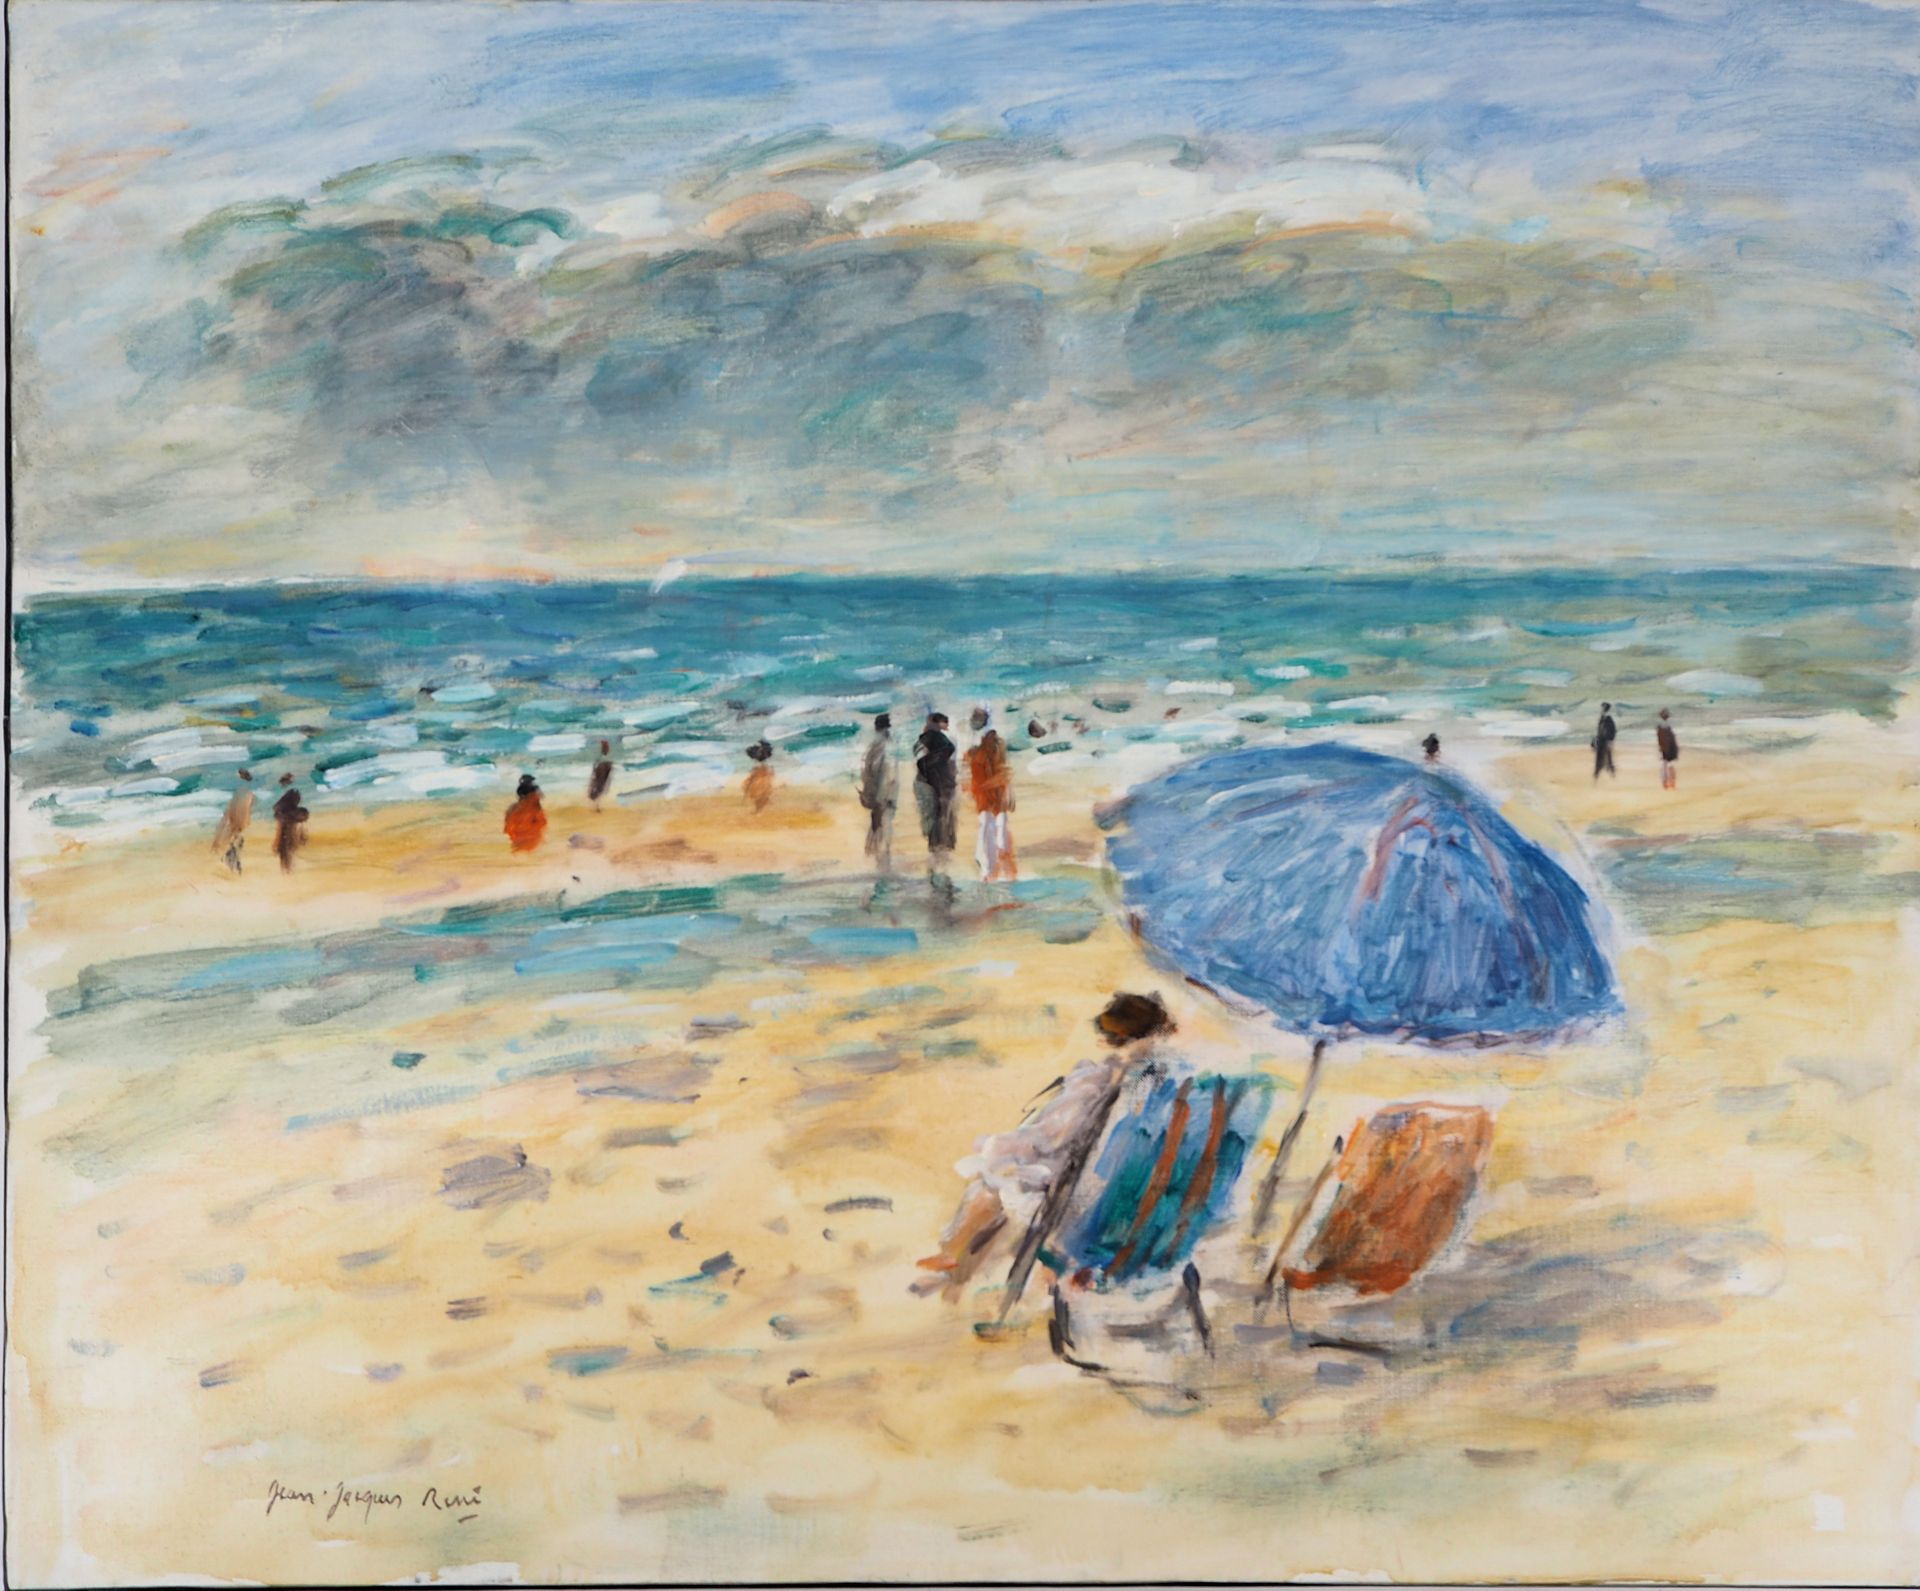 Jean-Jacques RENE 让-雅克-雷内 (1943)

布隆维尔的夏天

布面油画

左下方有签名

格式15F或65 x 54厘米

背面有标题
&hellip;